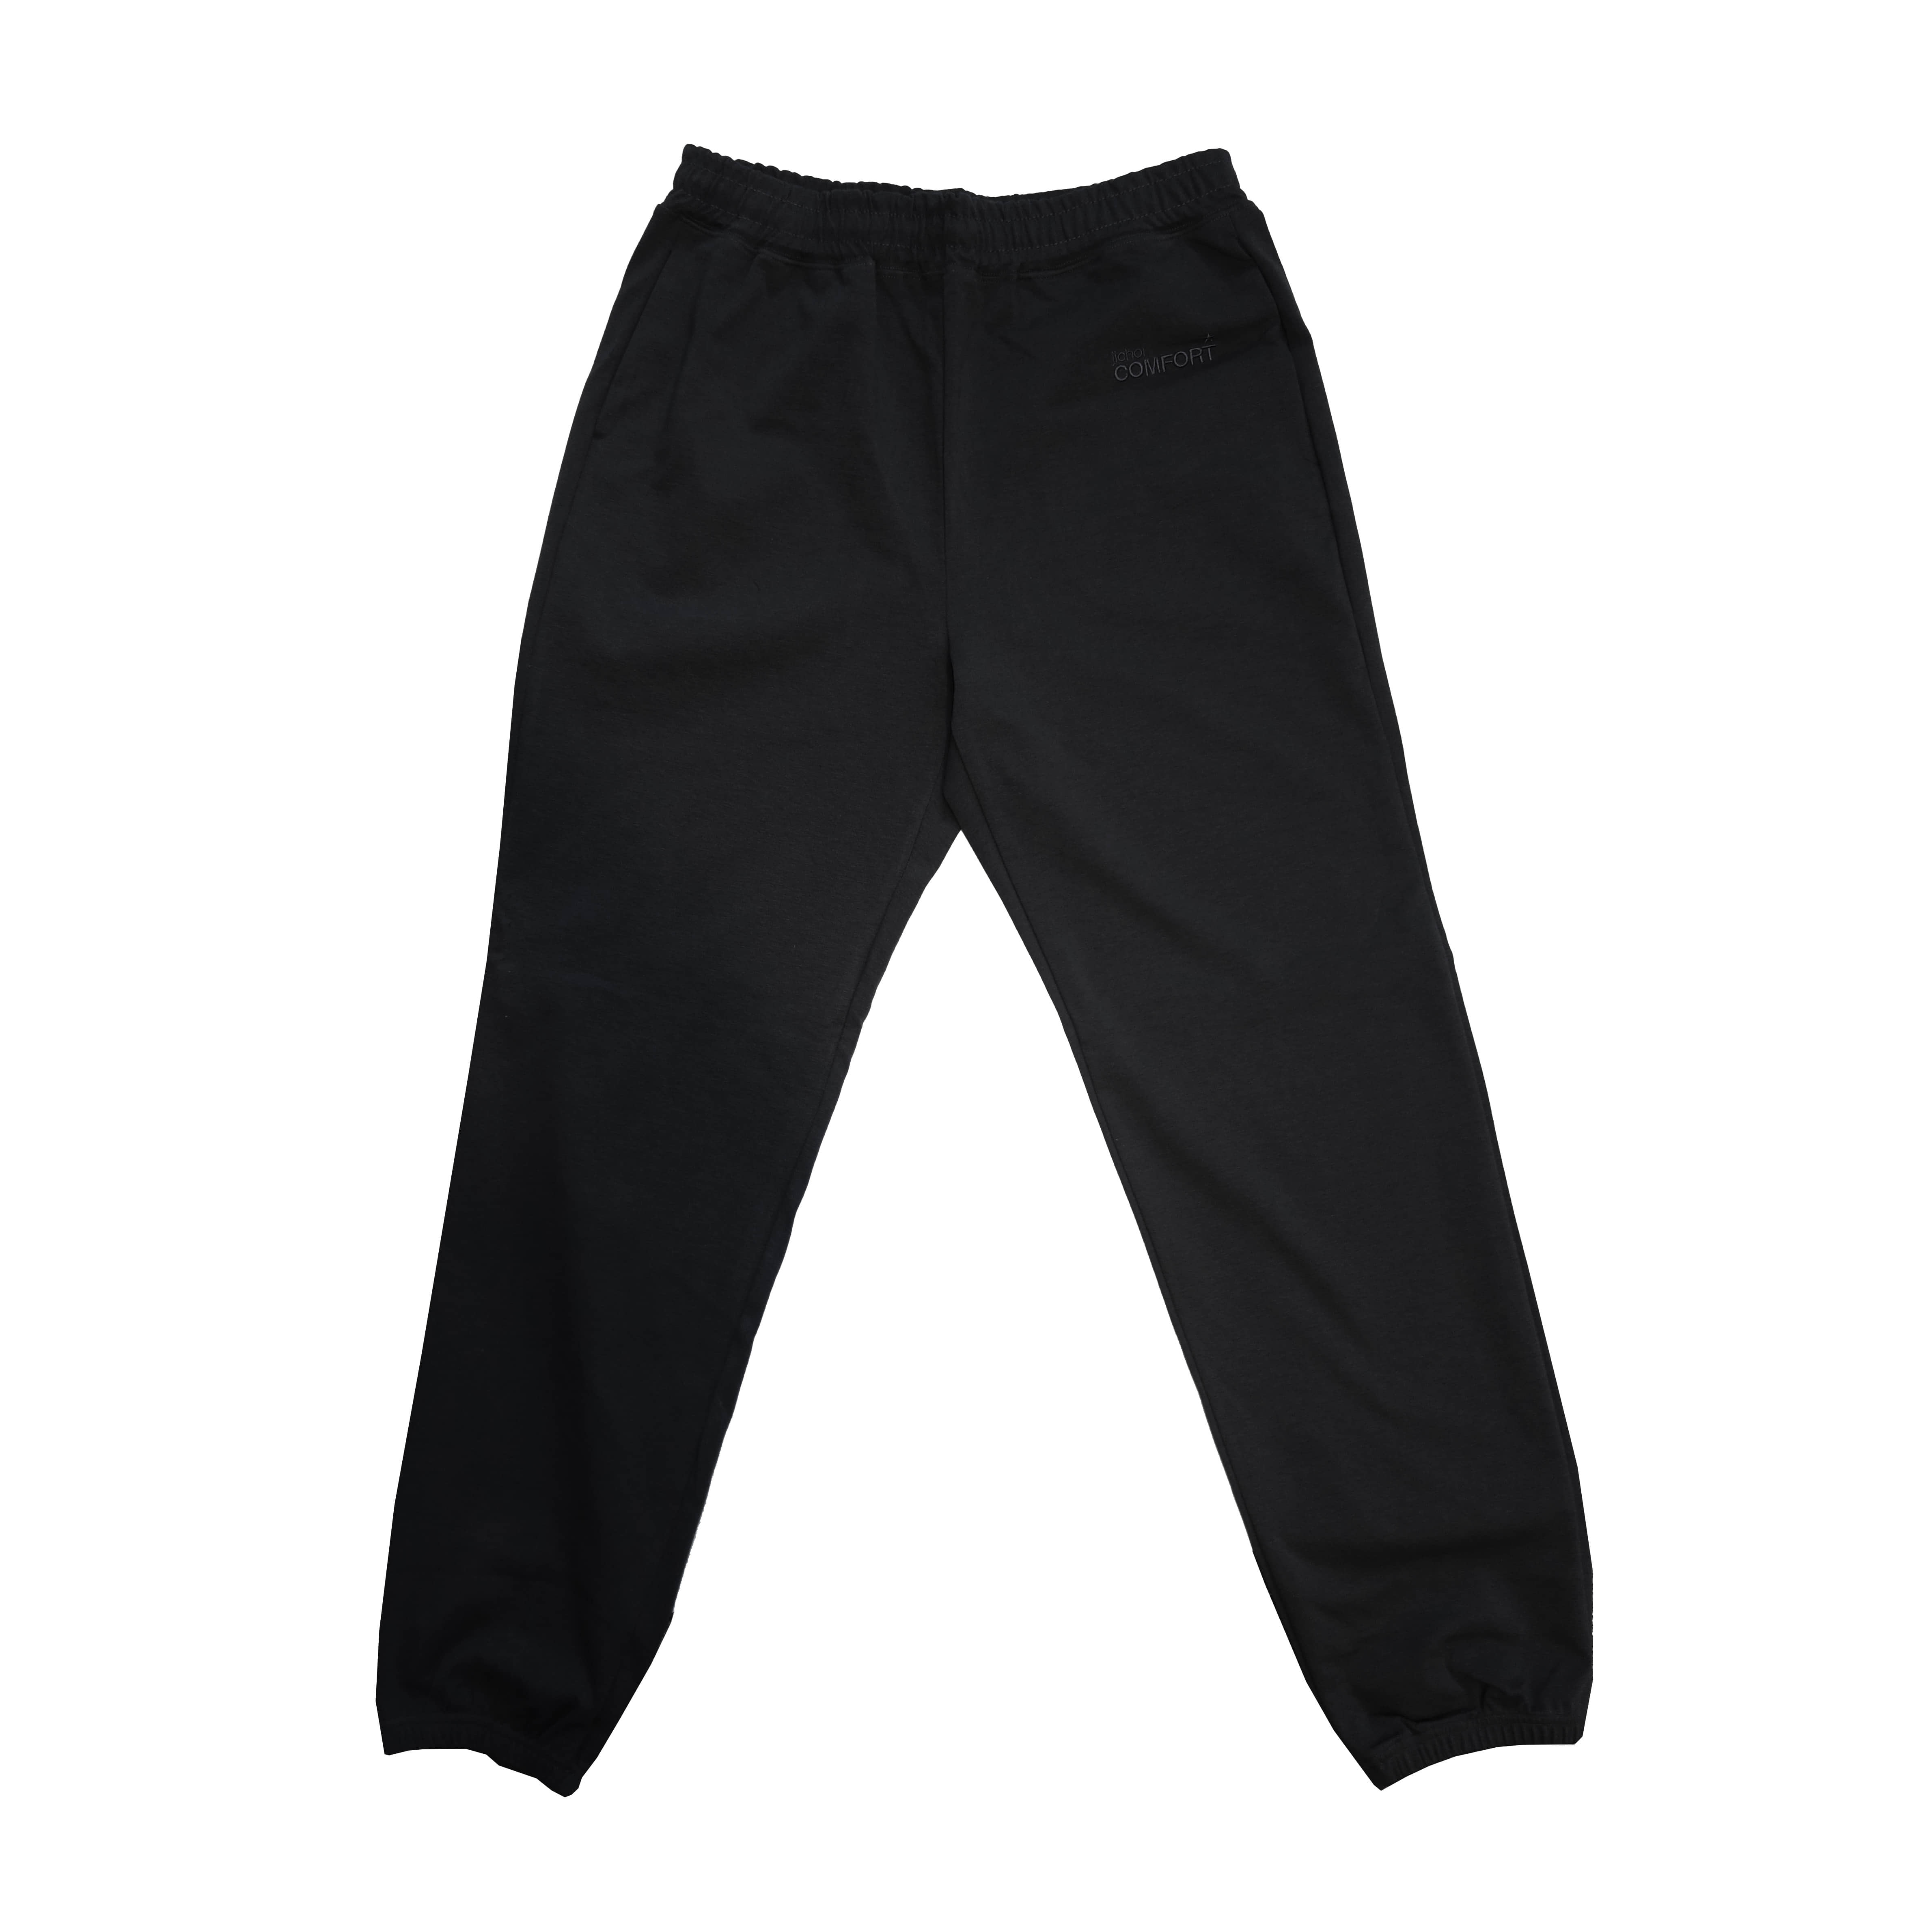 [jichoi COMFORT] 22-005 SWEAT PANTS (BLACK)